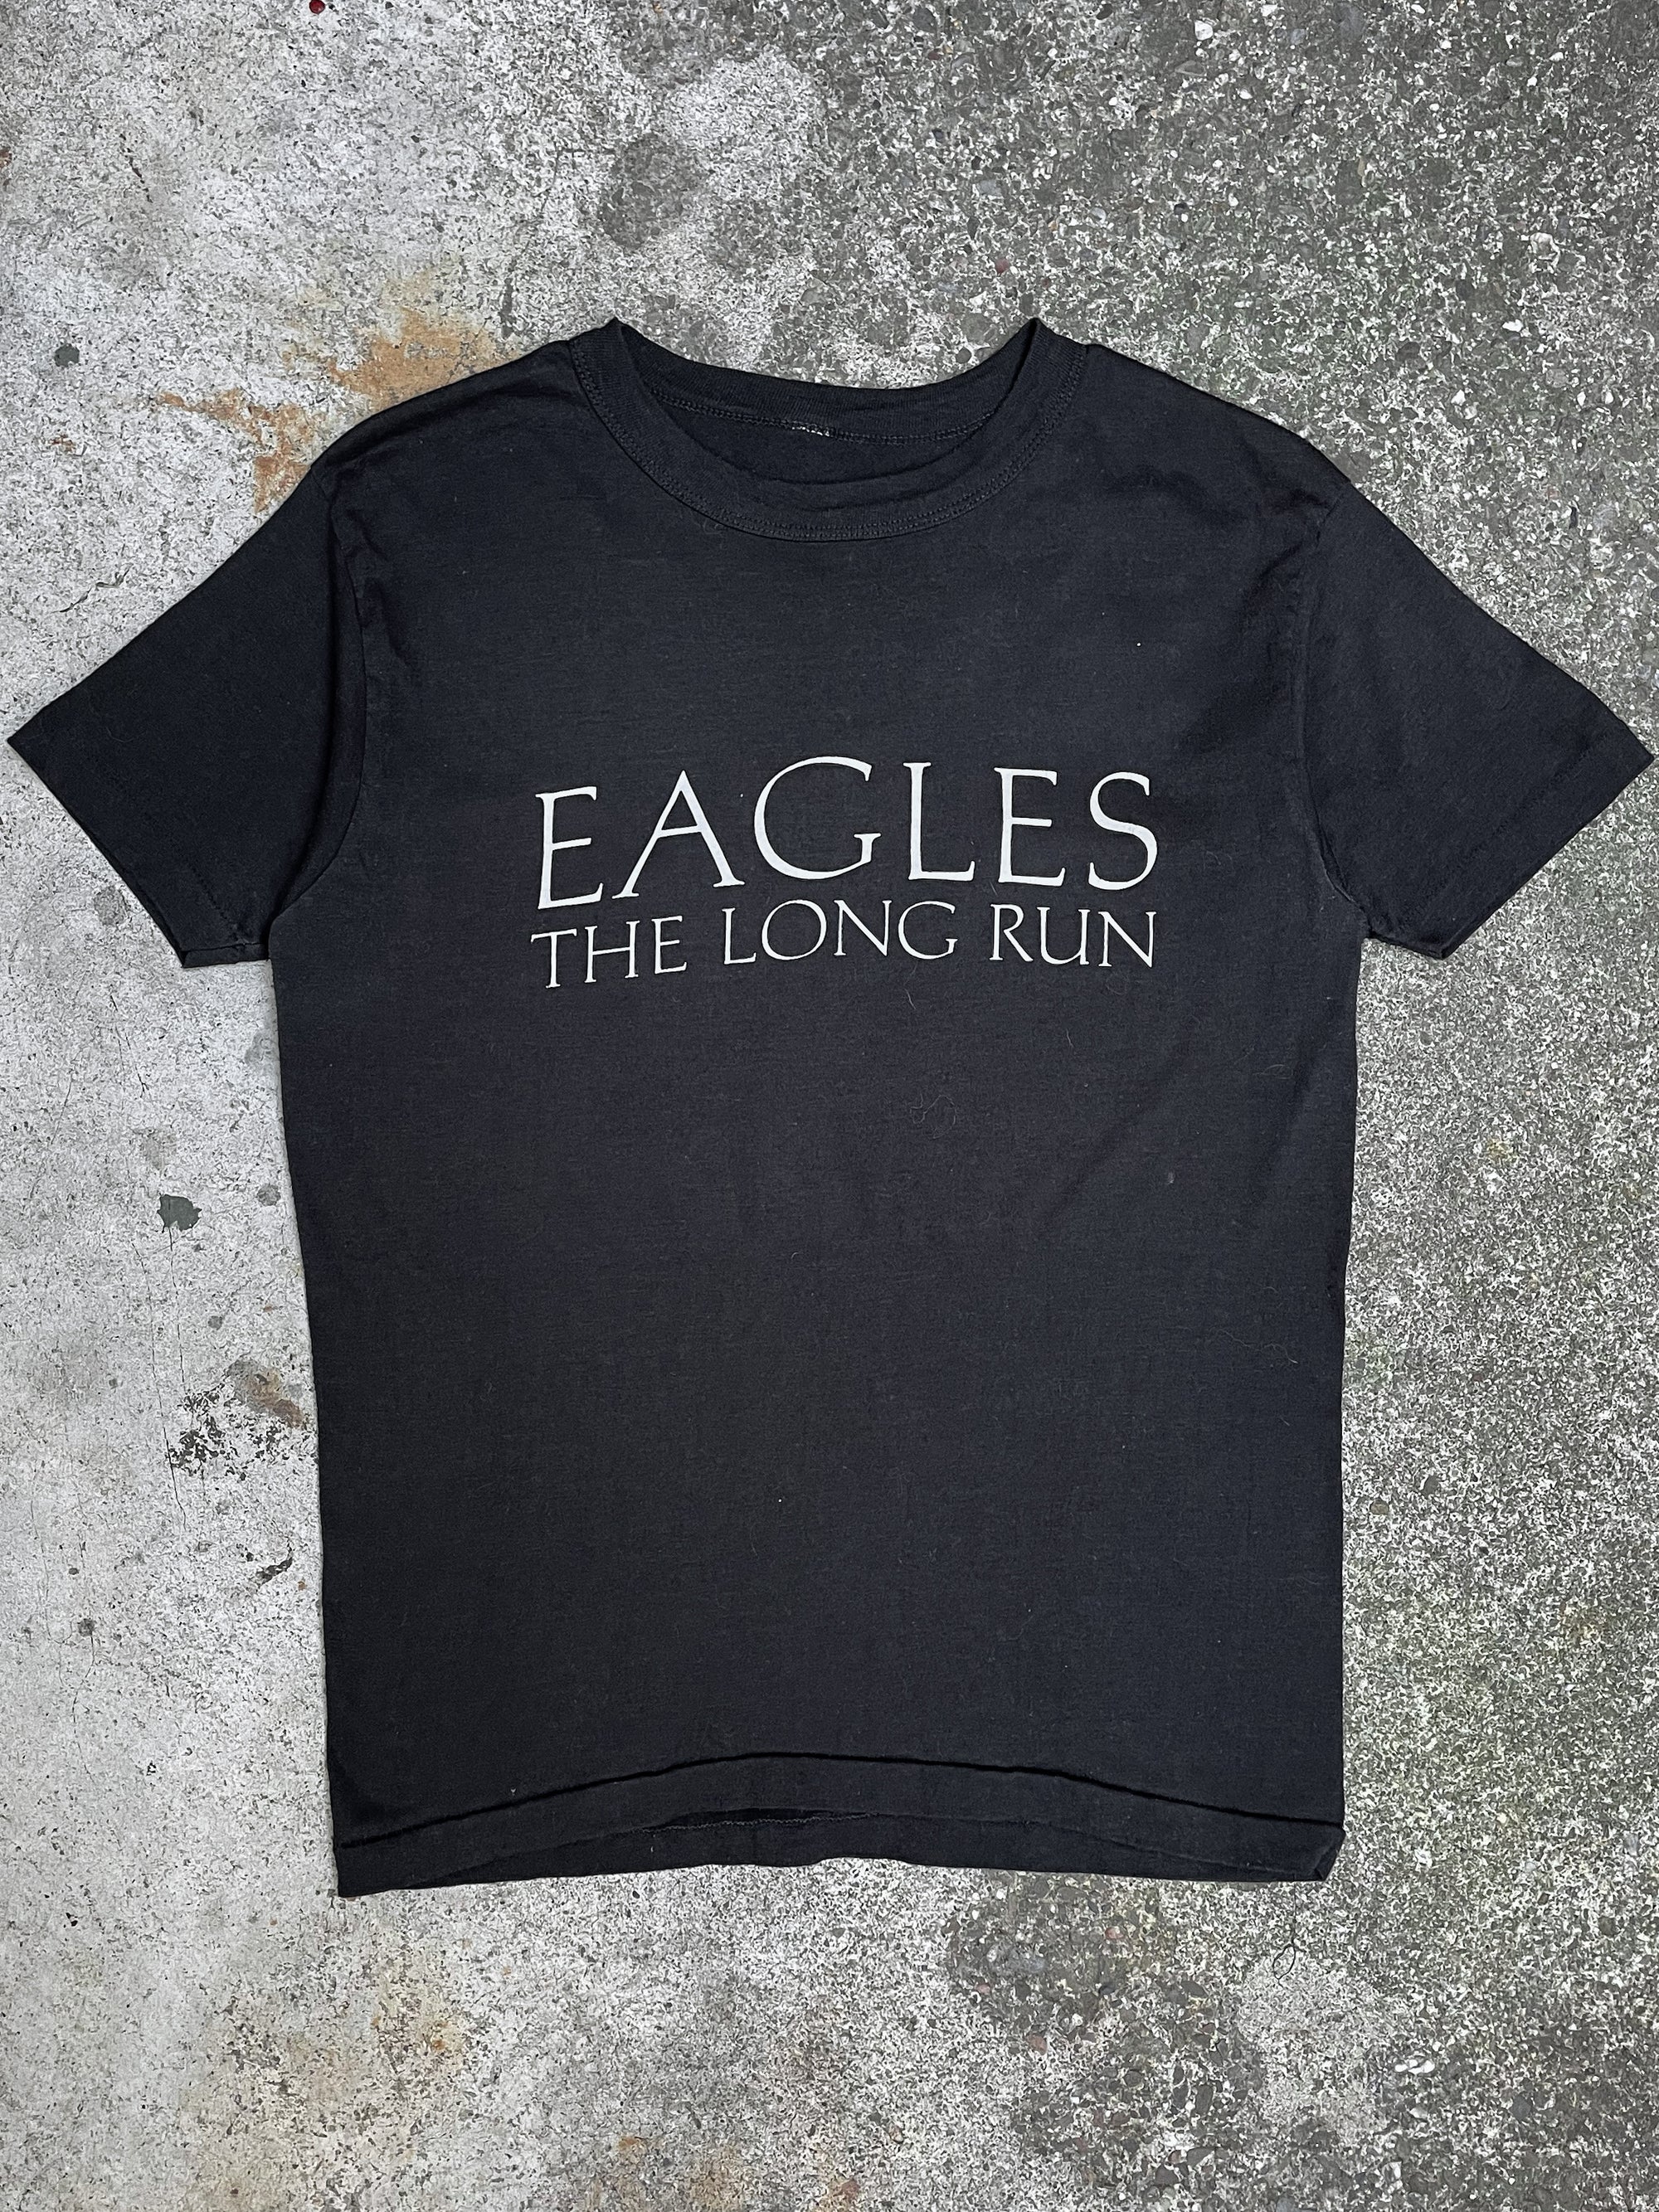 1980s Eagles “The Long Run” Tee (M)